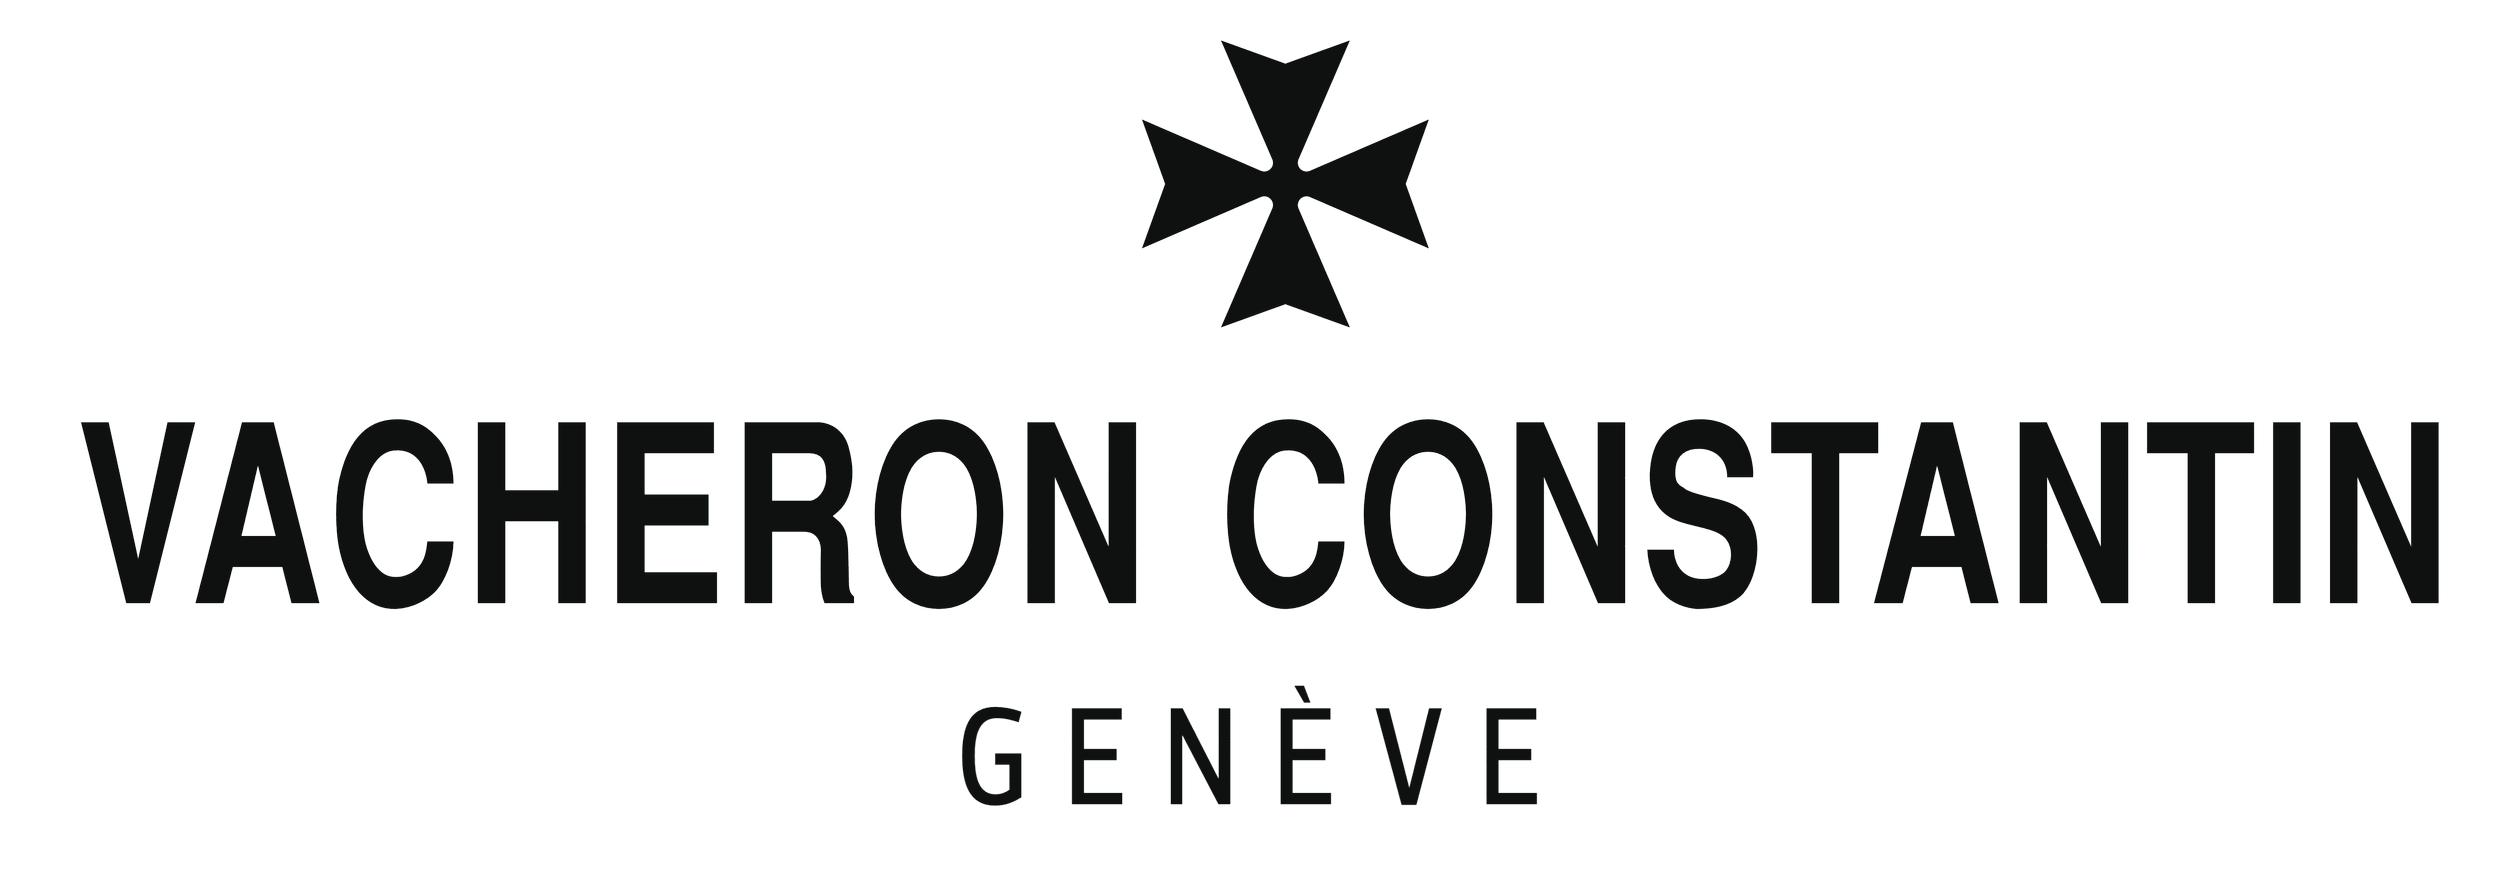 Fine Art Installation Service - Vacheron Constantin logo PNG3